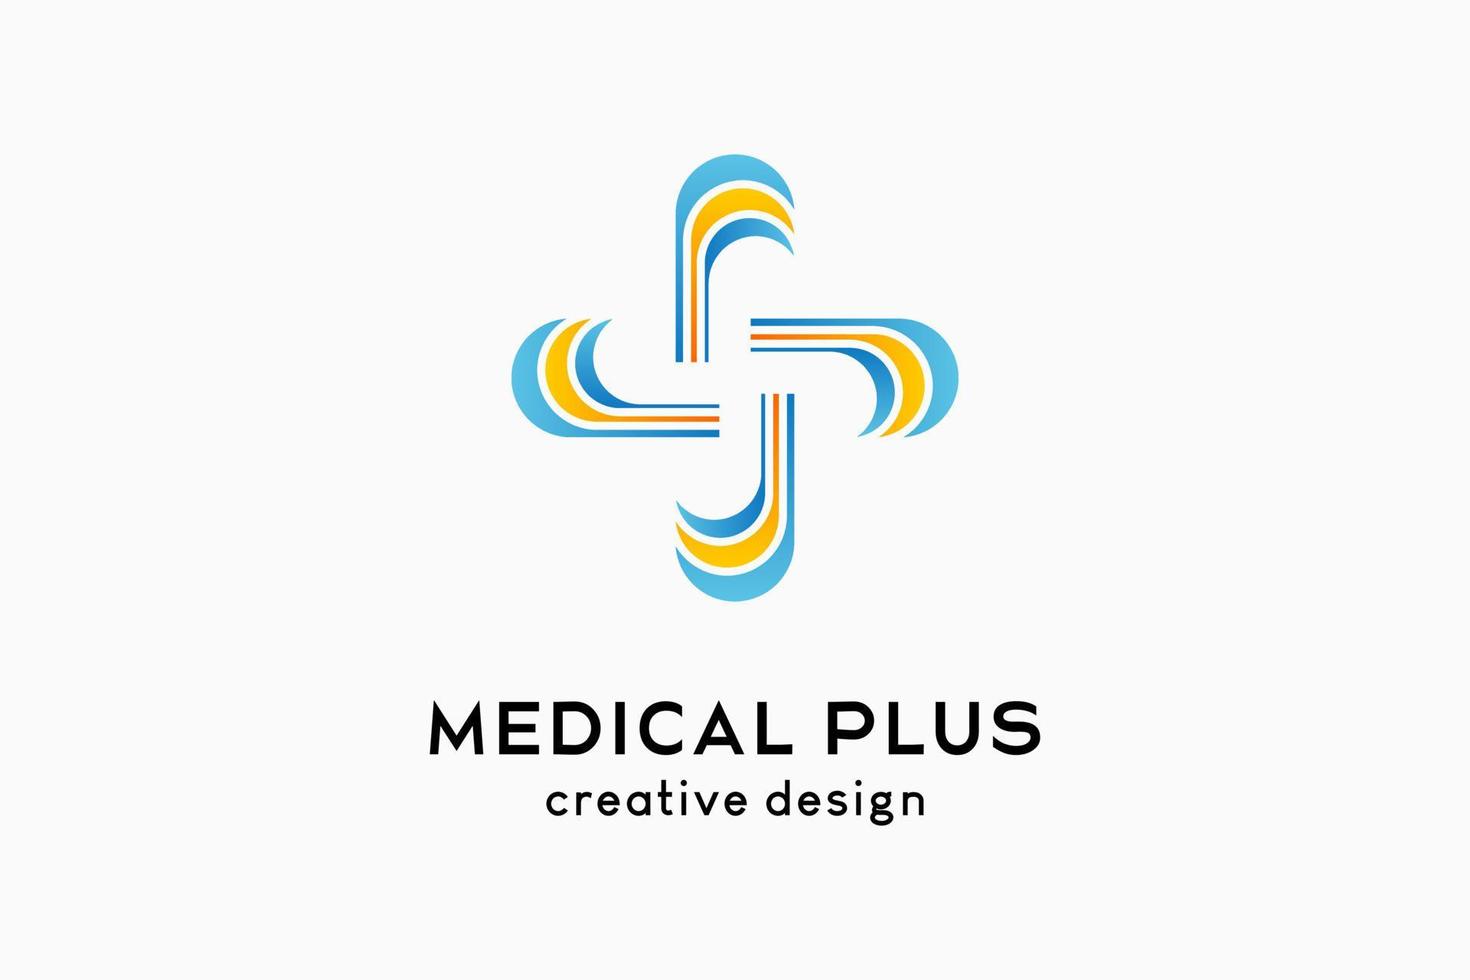 Medical plus logo design with creative concept vector